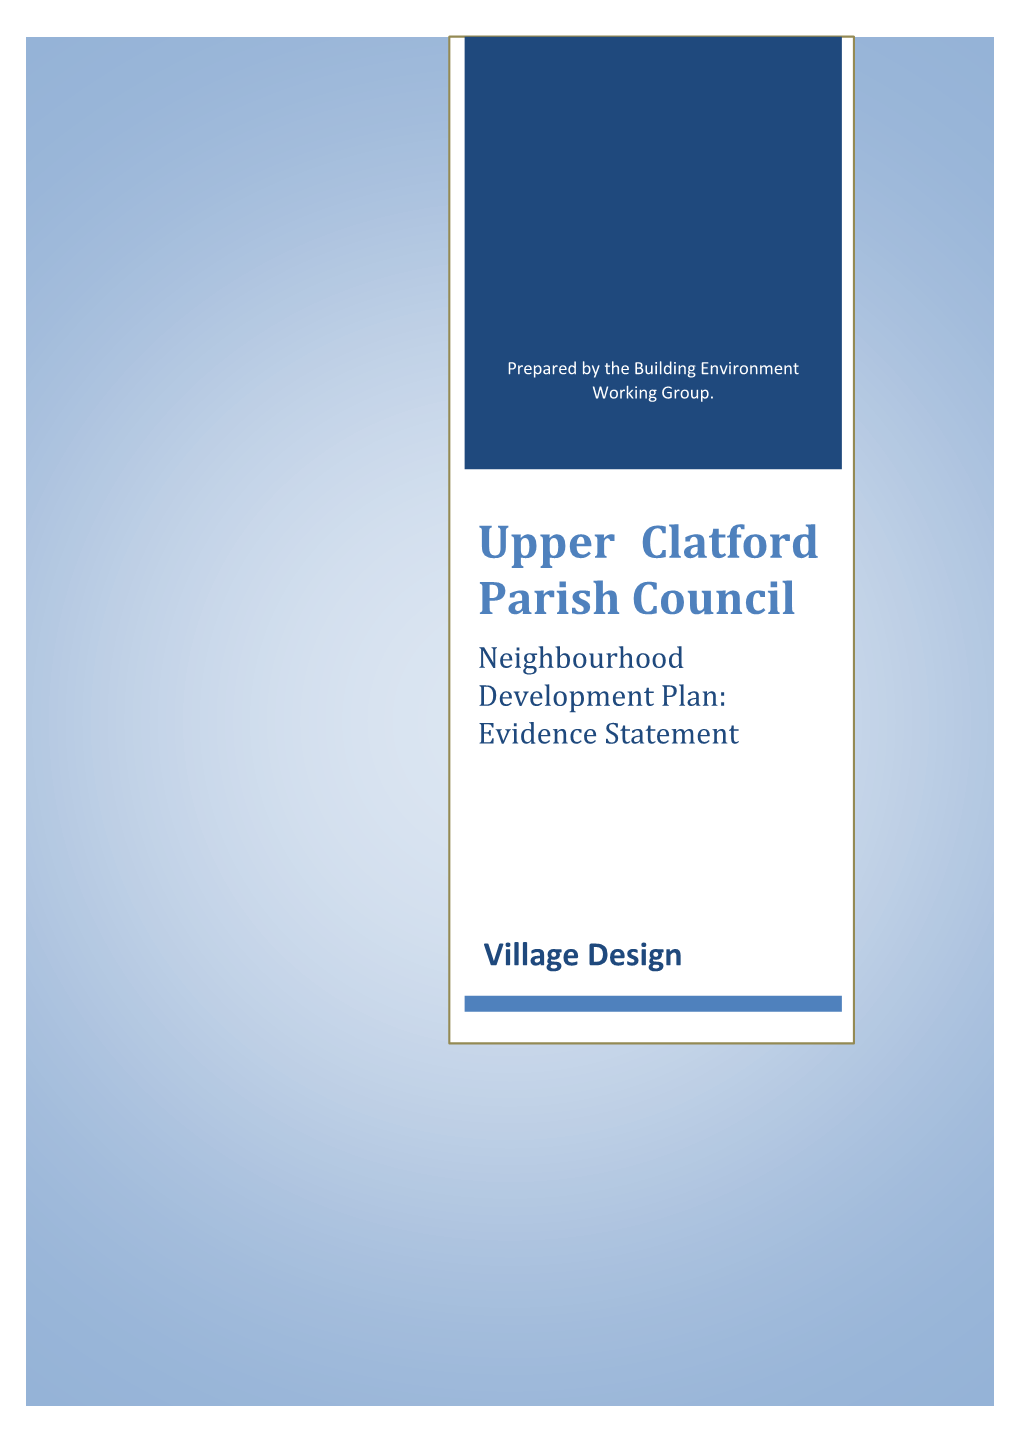 Upper Clatford Parish Council